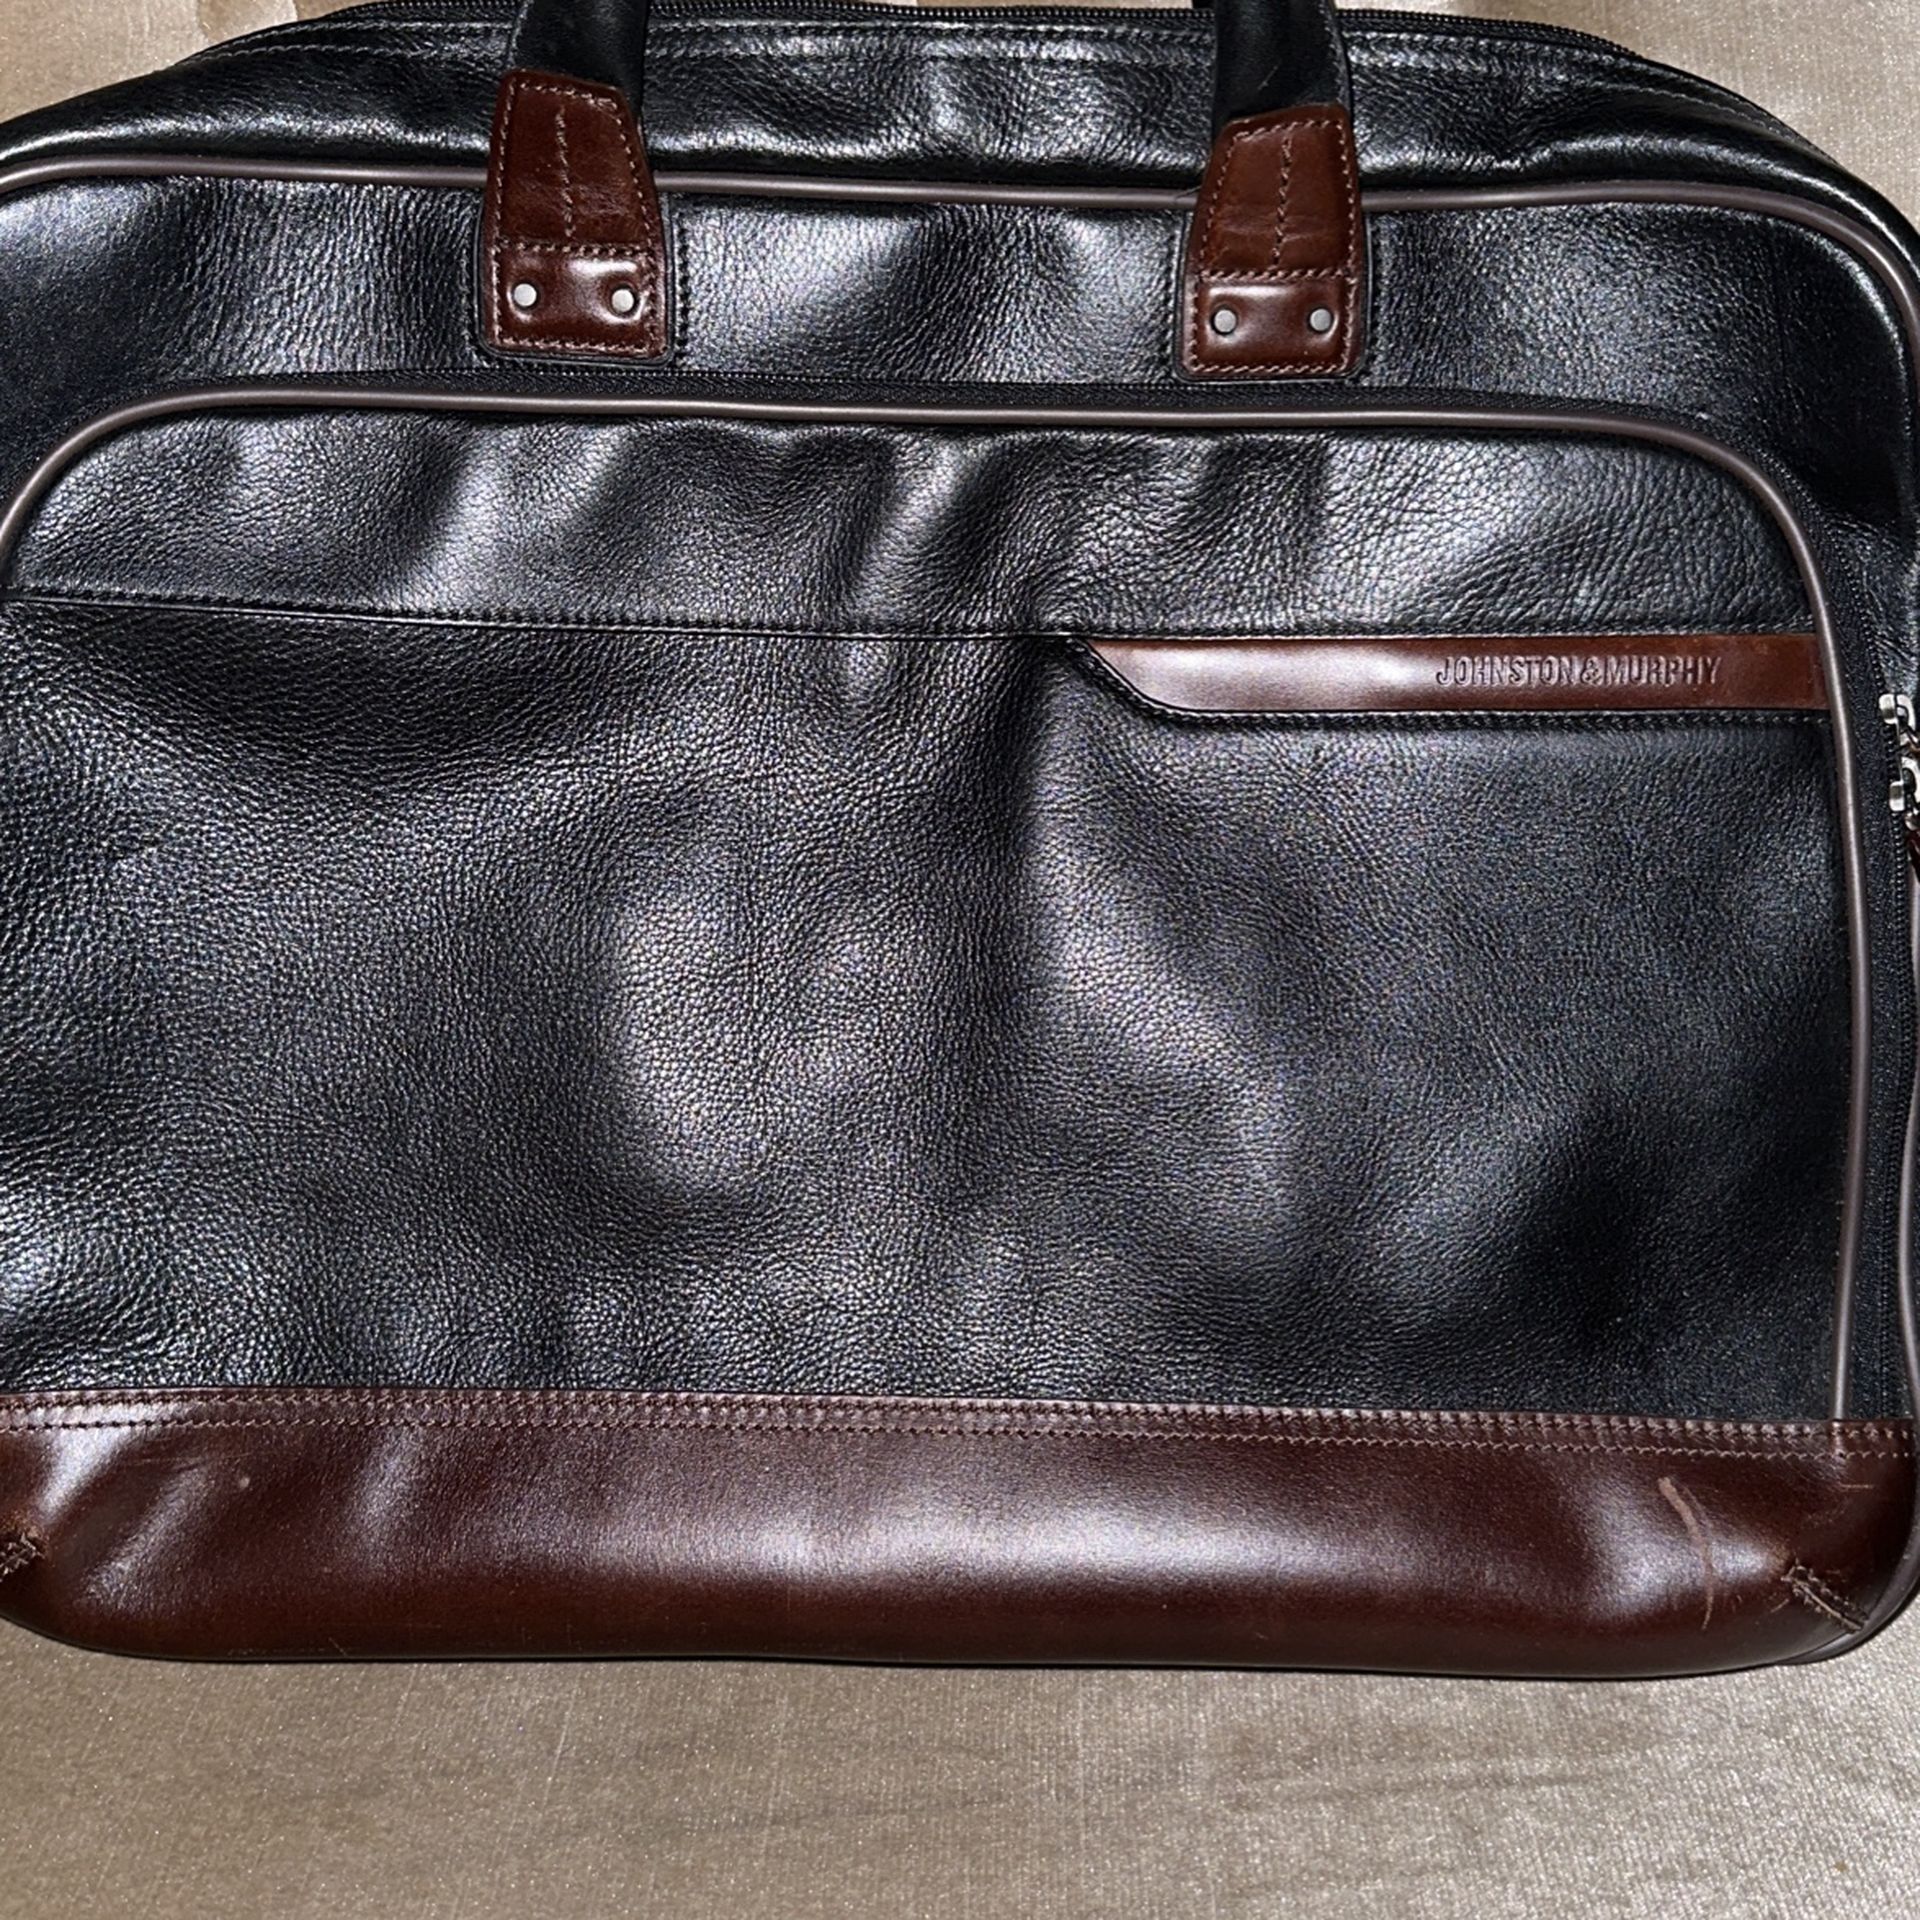 Johnston & Murphy Leather Briefcase